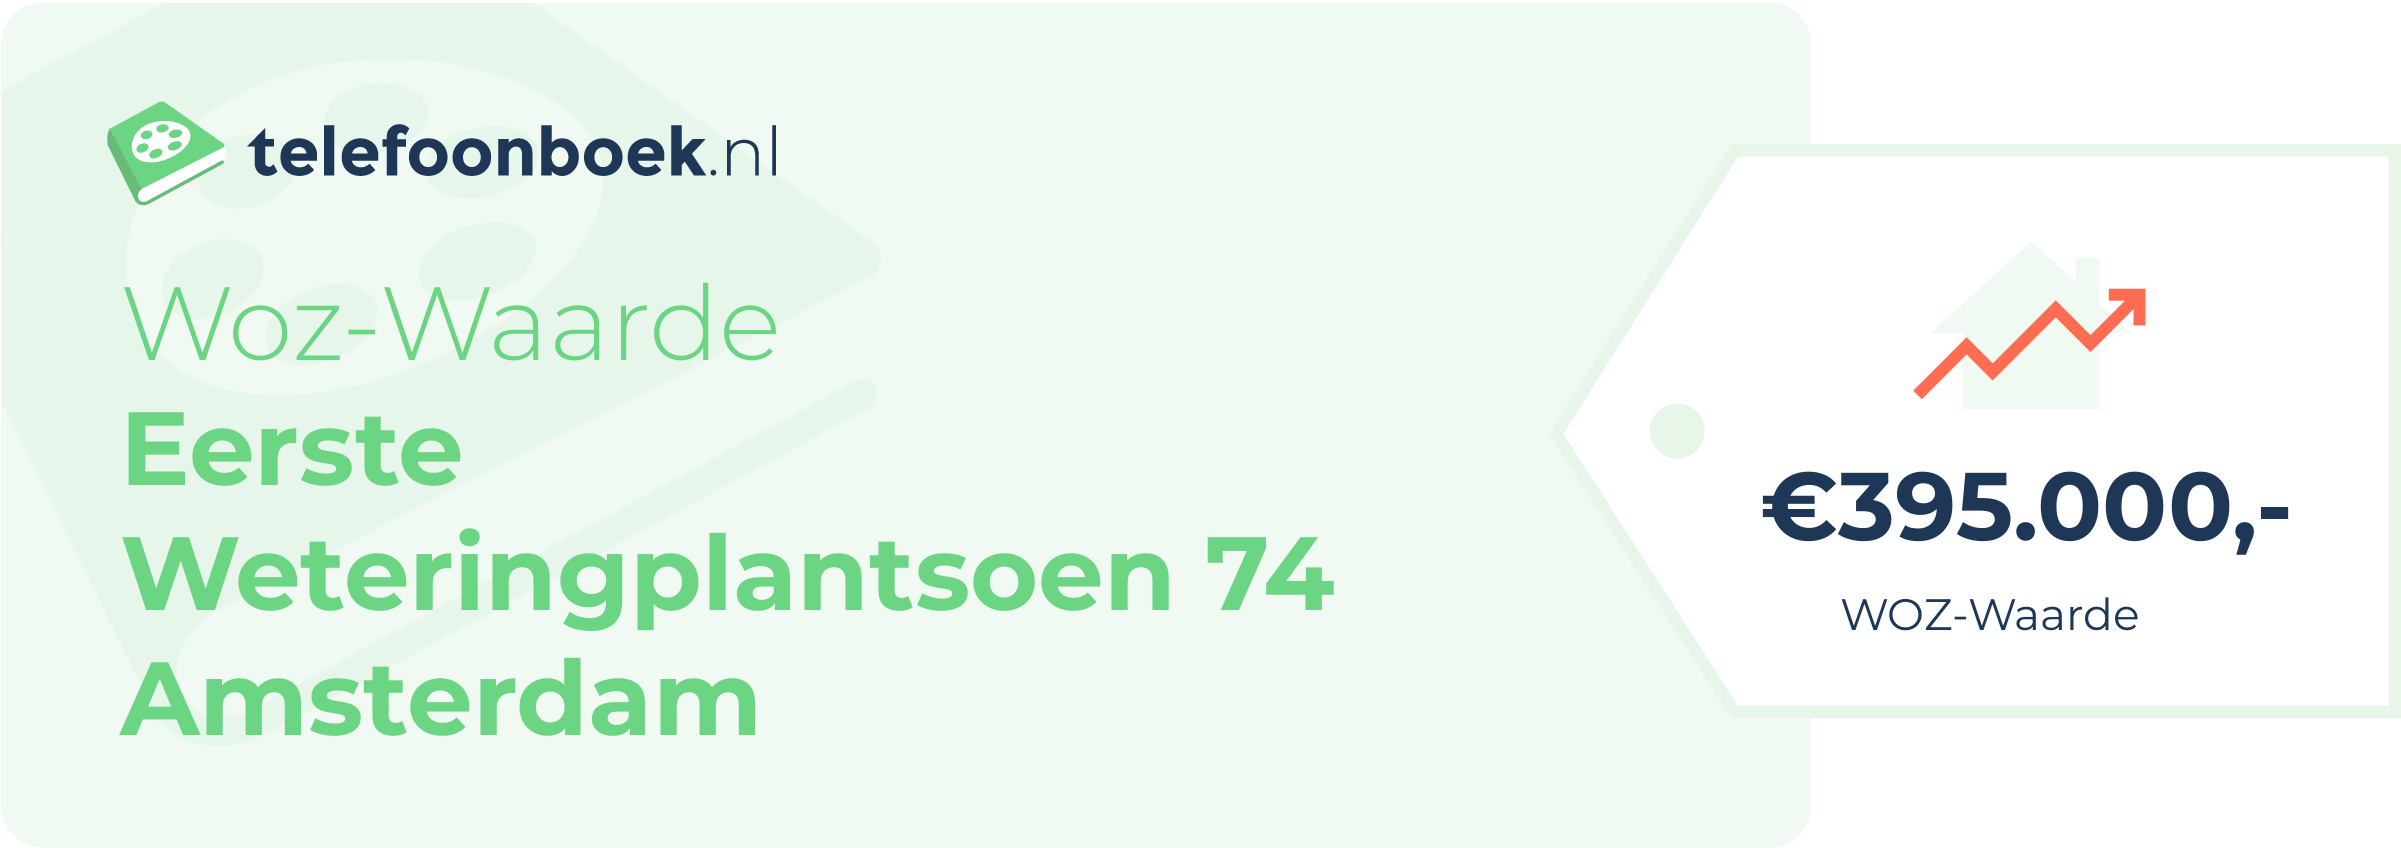 WOZ-waarde Eerste Weteringplantsoen 74 Amsterdam